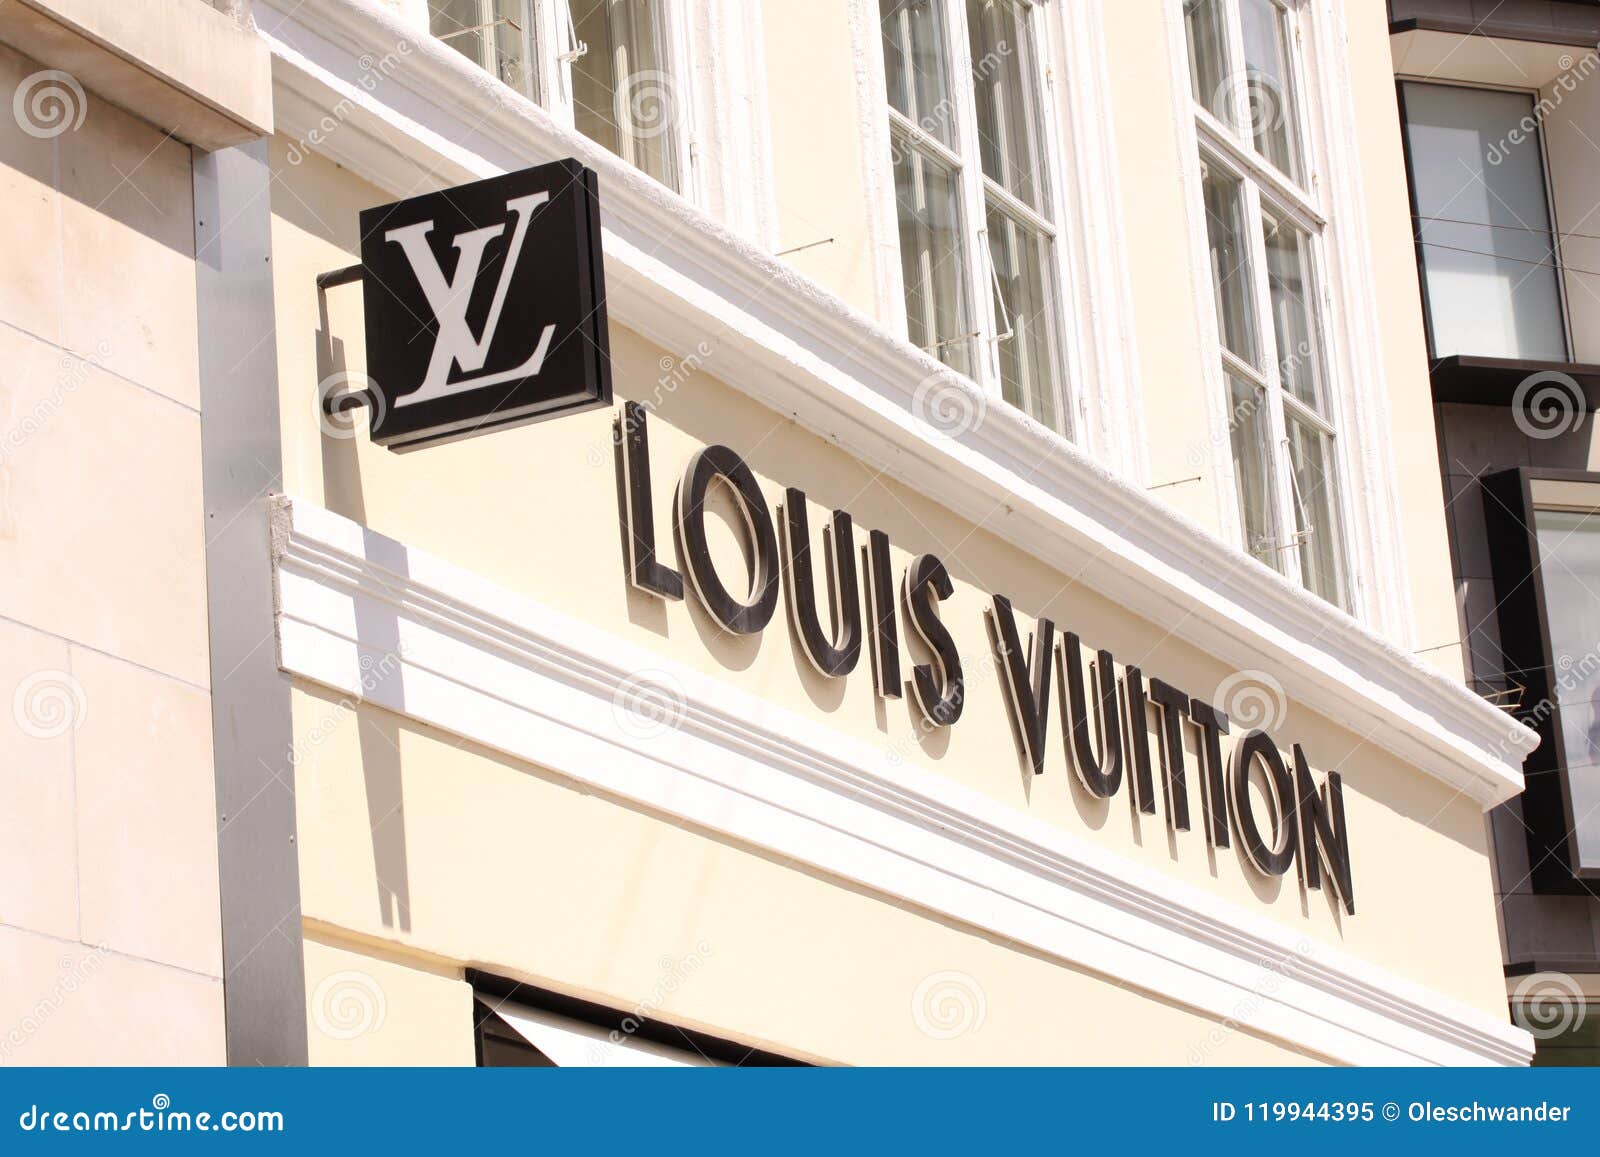 Louis Vuitton Logo Sign Panel On Shop. Louis Vuitton Is A Famous High End Fashion House ...